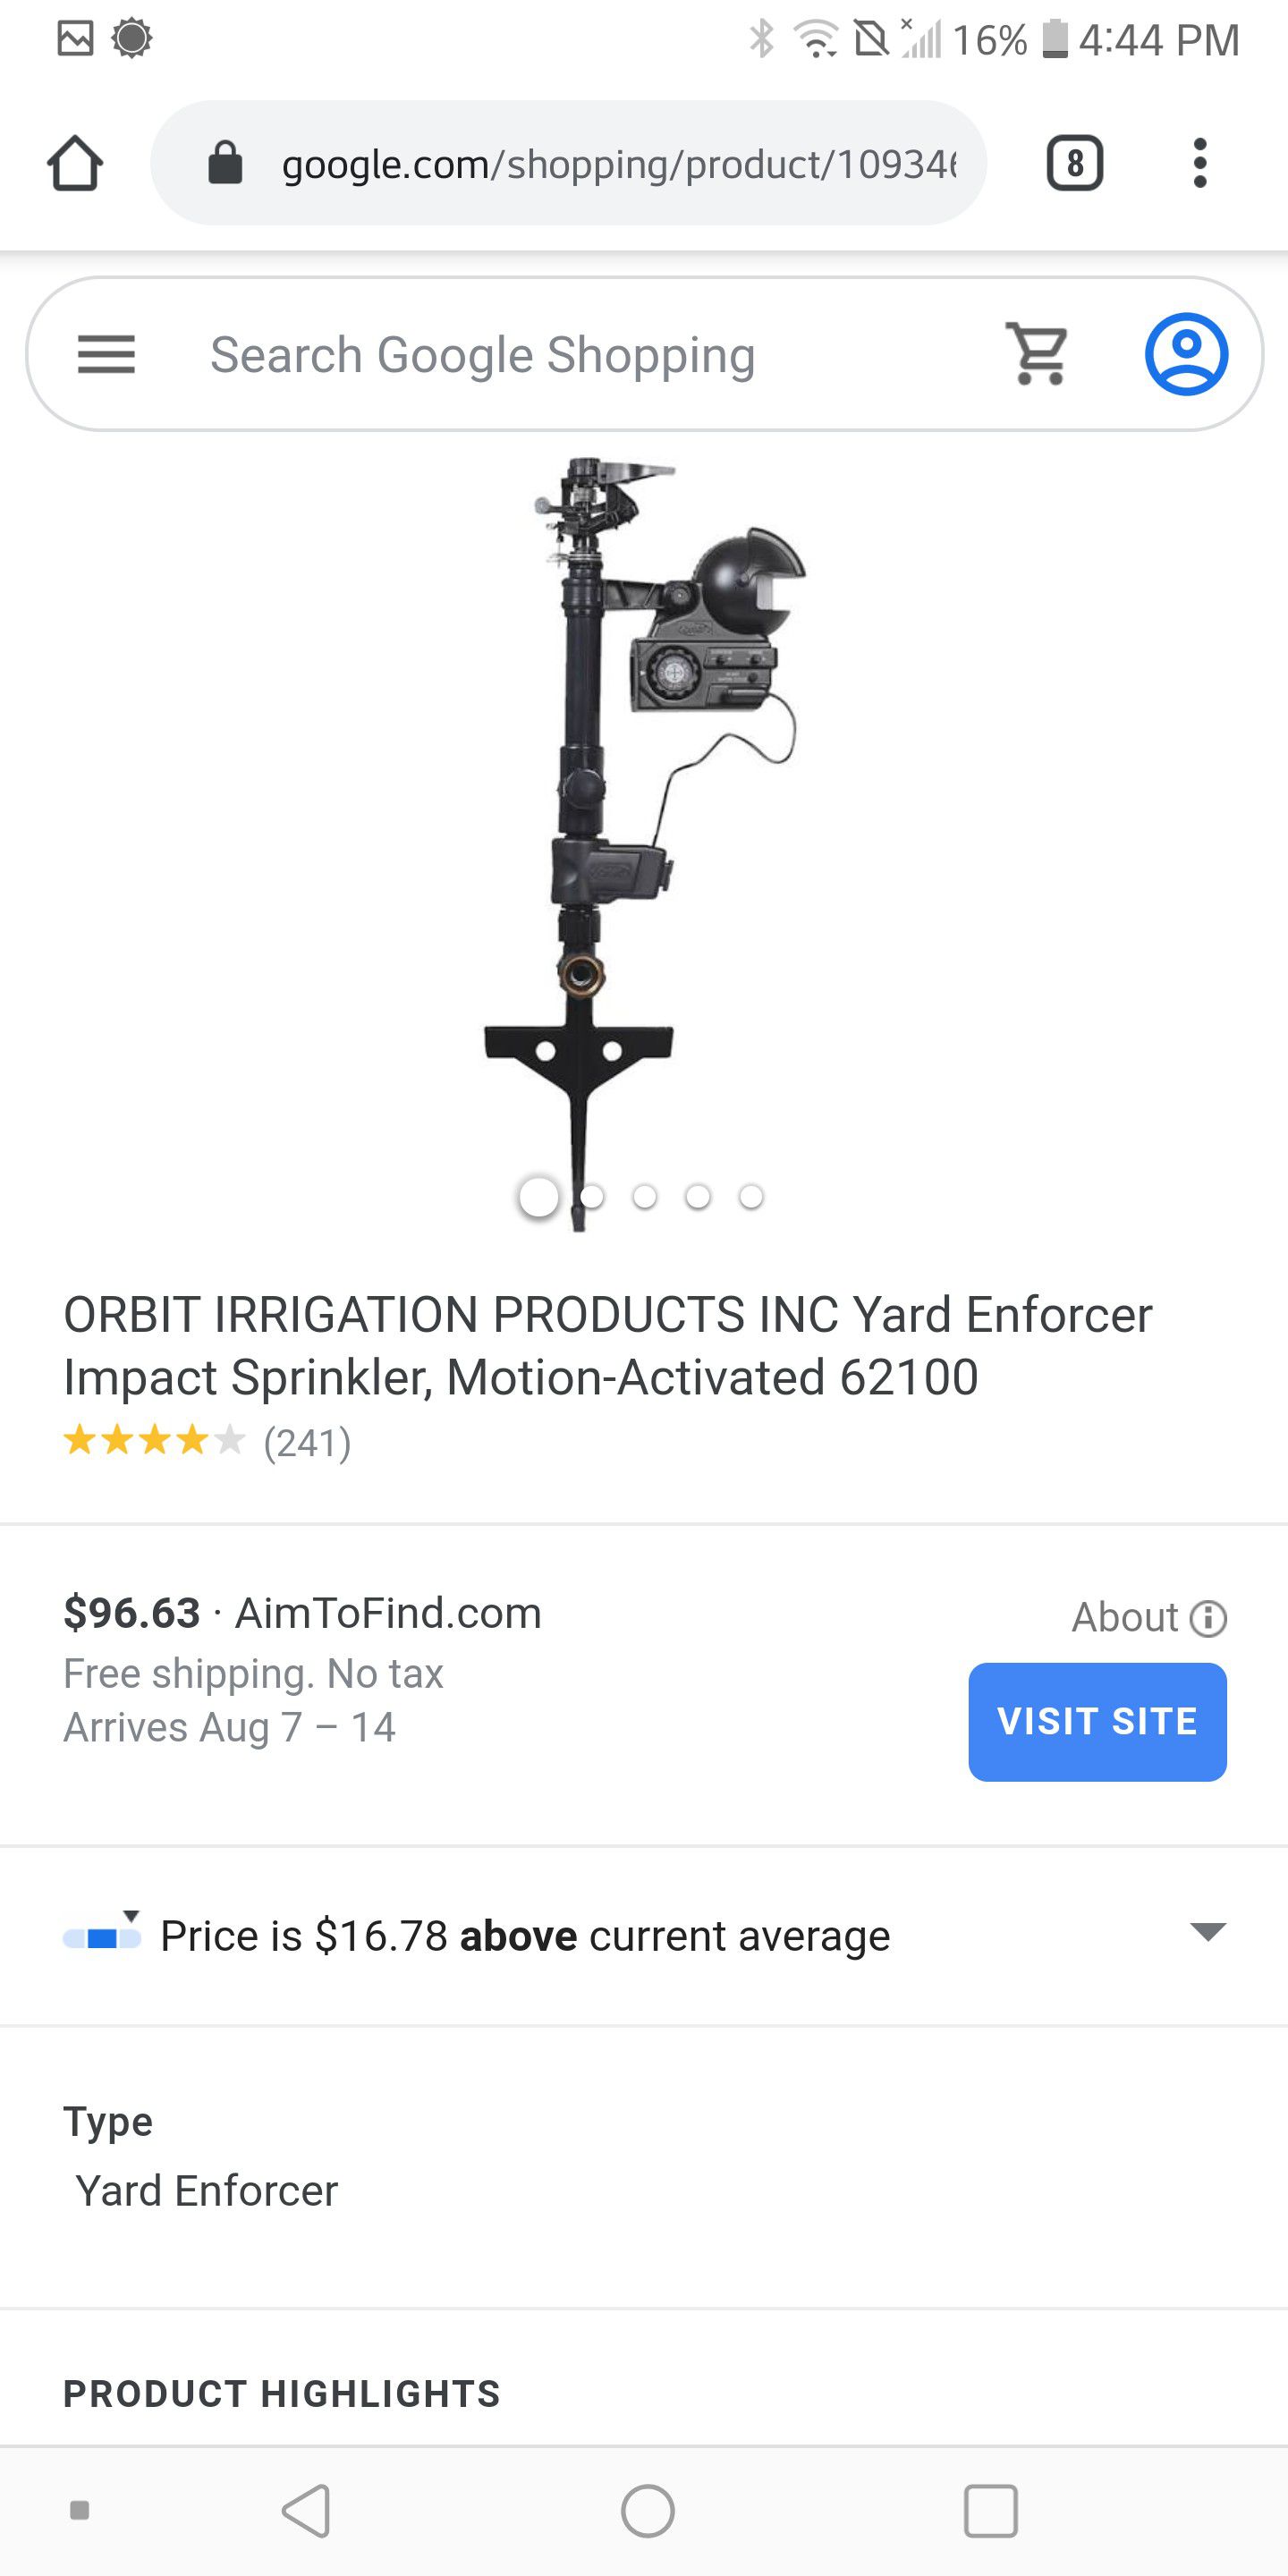 ORBIT IRRIGATION PRODUCTS INC Yard Enforcer Impact Sprinkler, Motion-Activated 62100